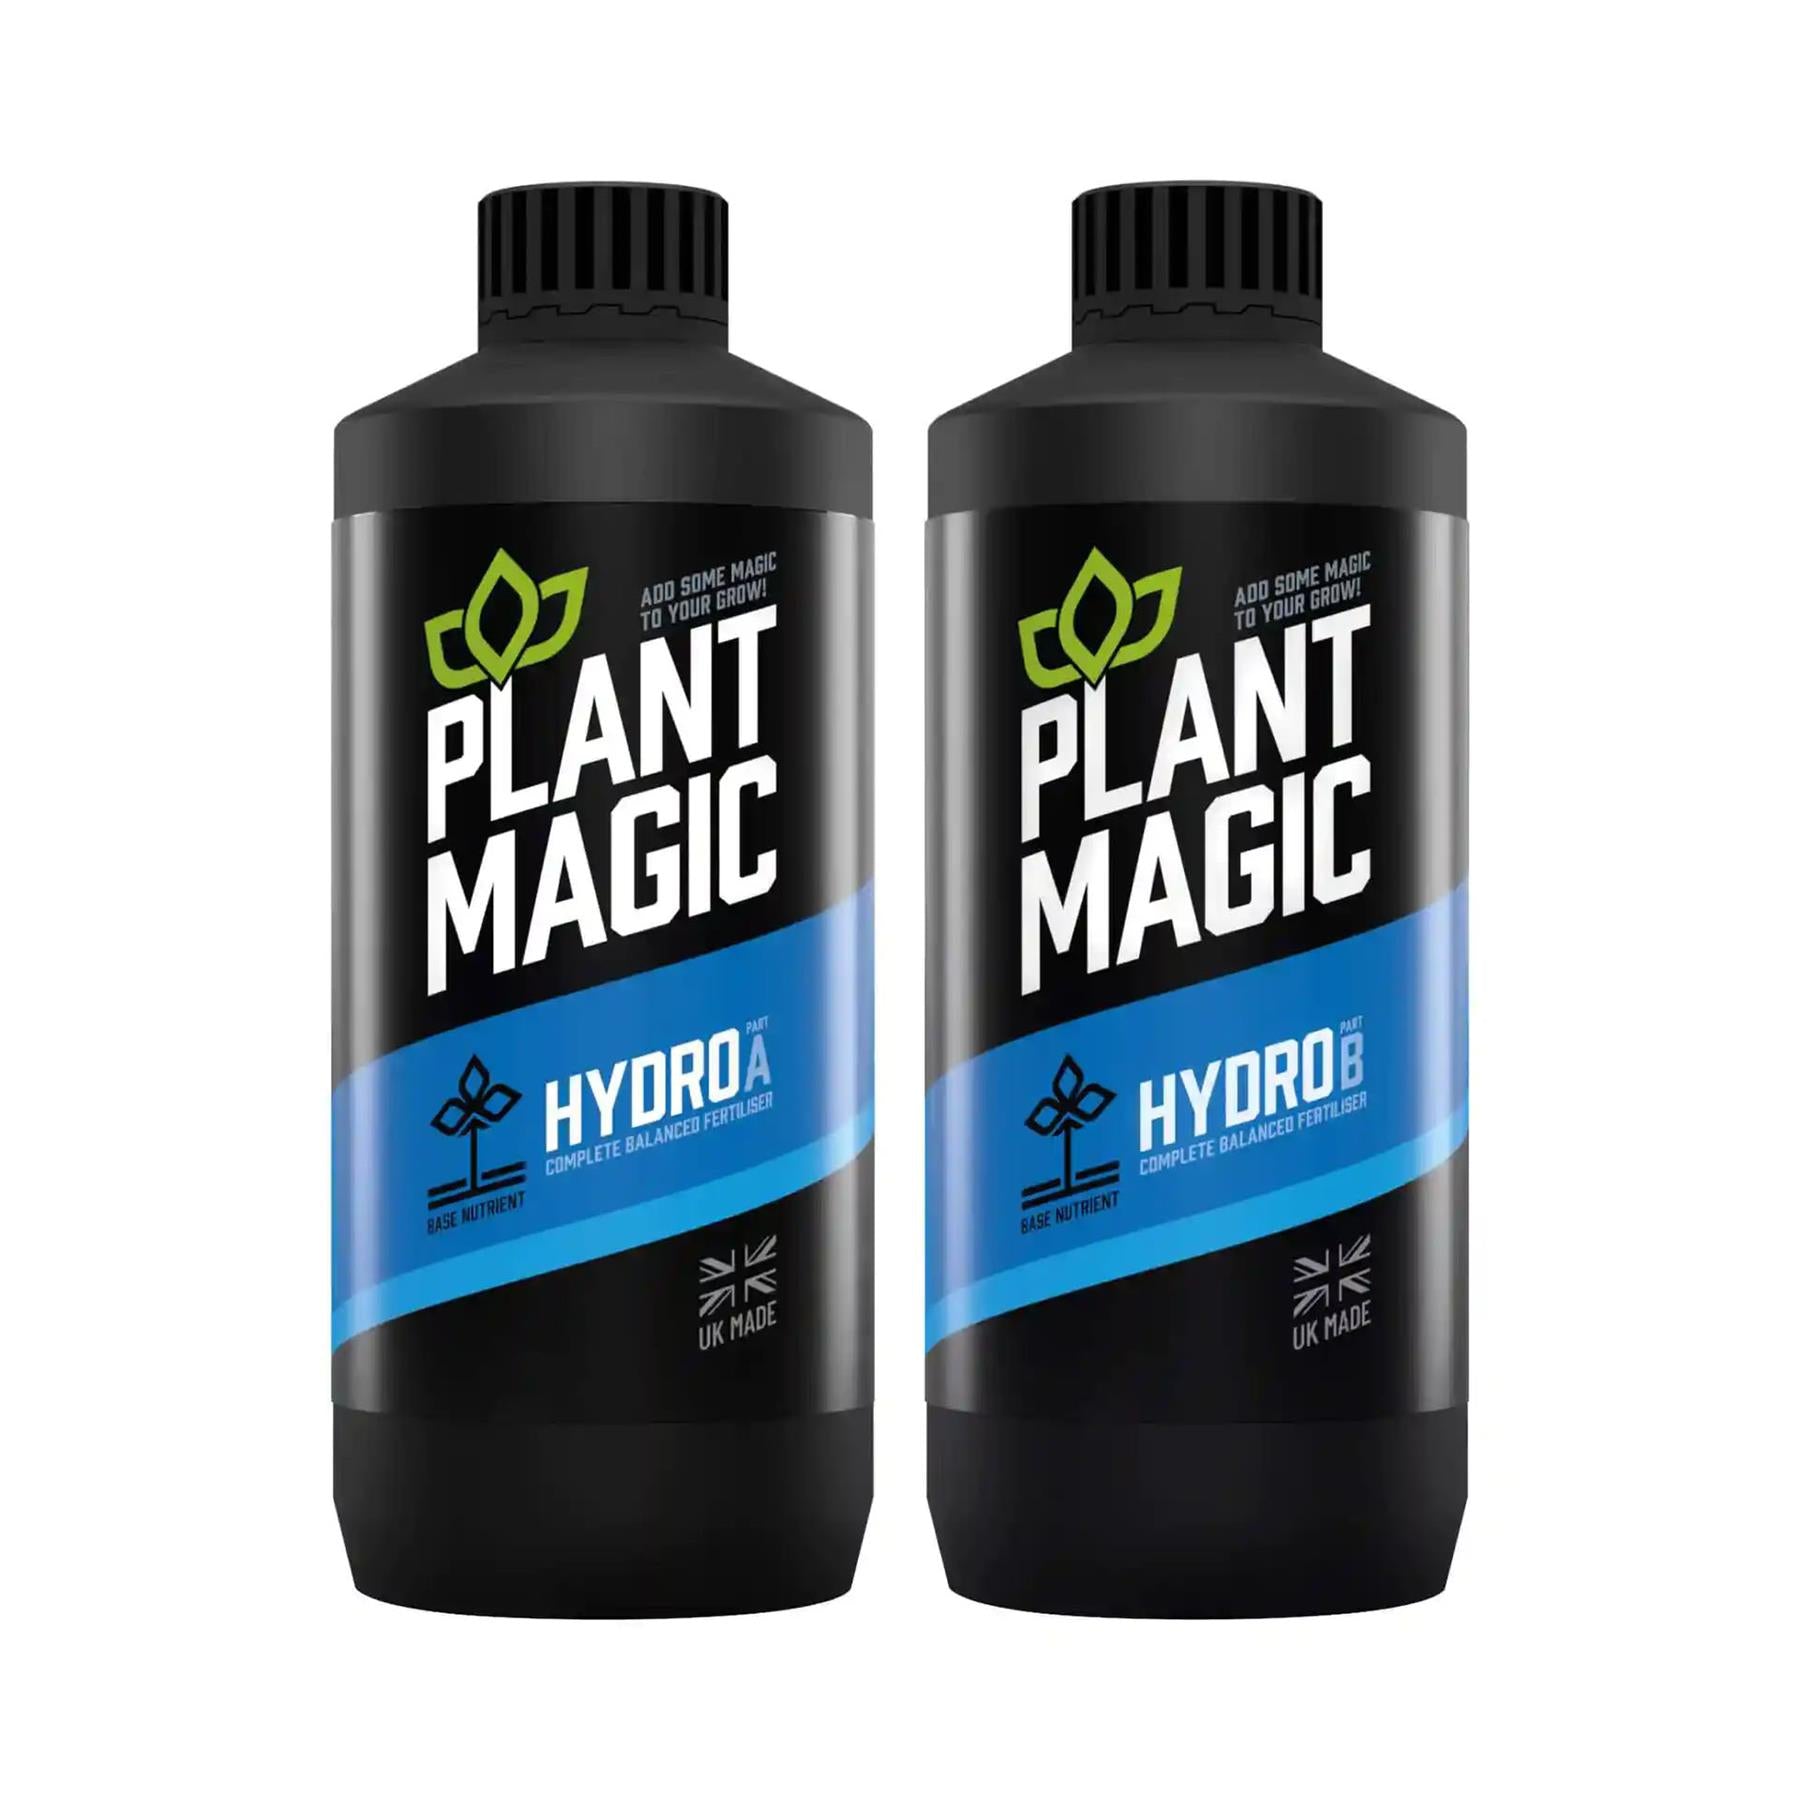 Plant Magic Hydro Base